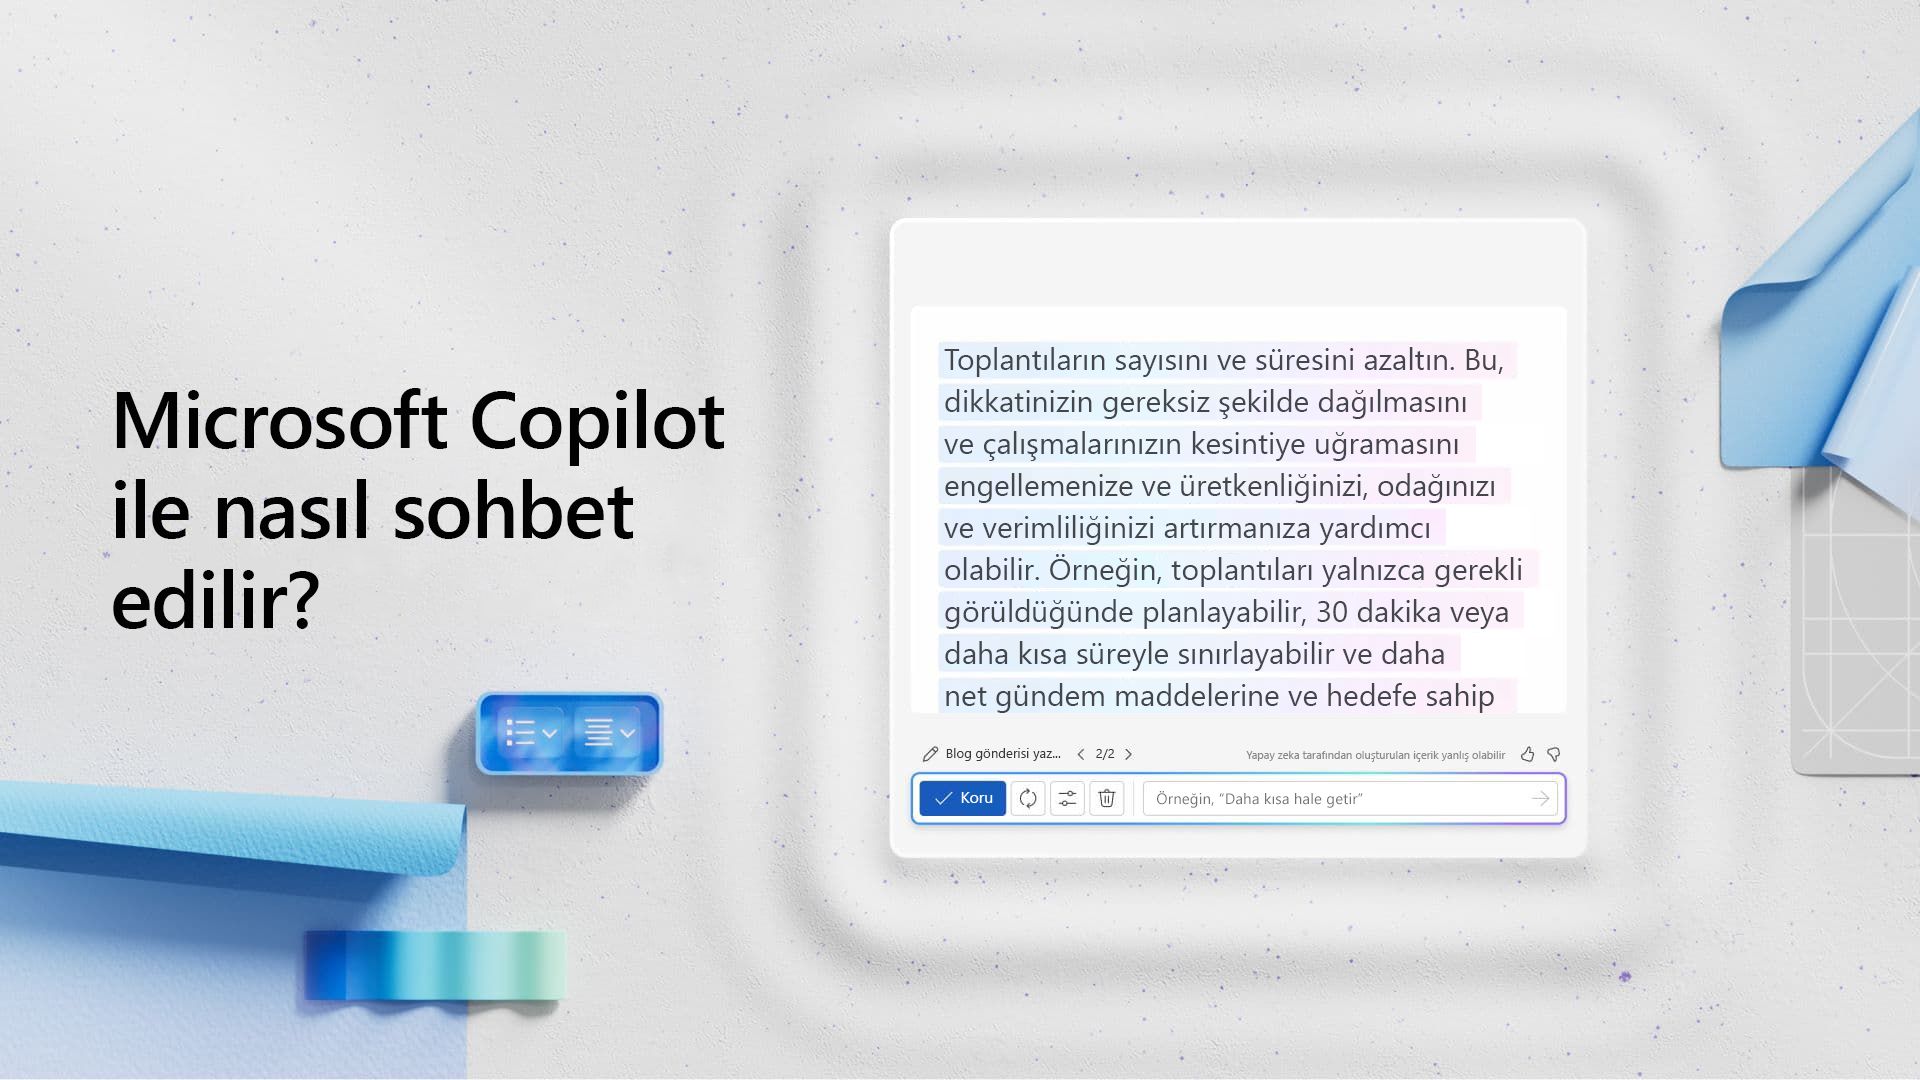 Video: Microsoft Copilot ile sohbet etme